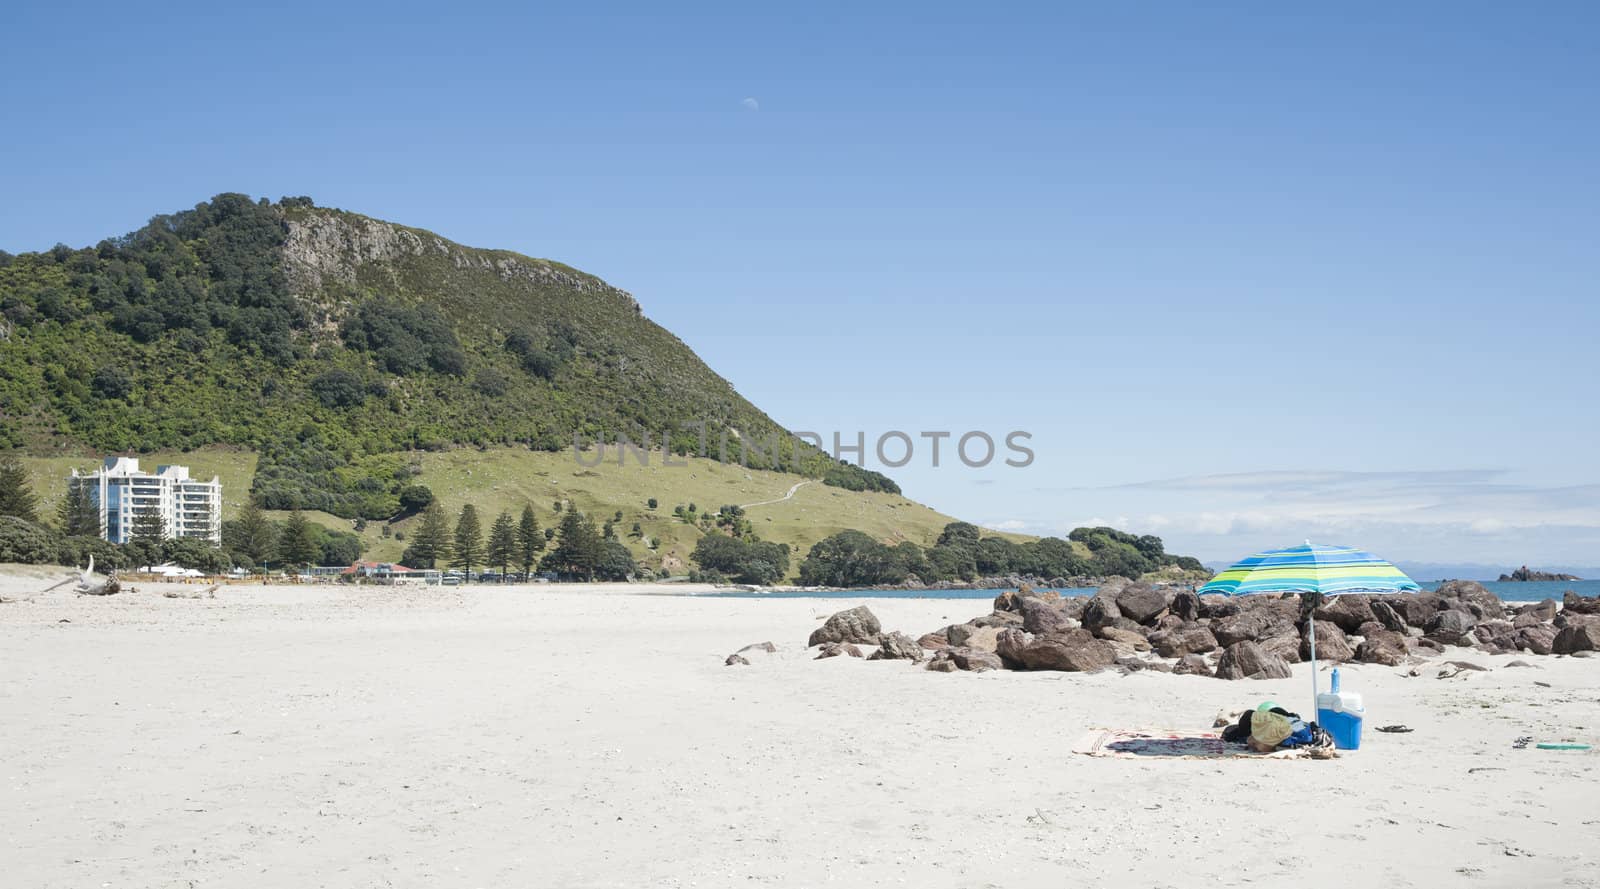 White sandy beach with Mount Maunganui